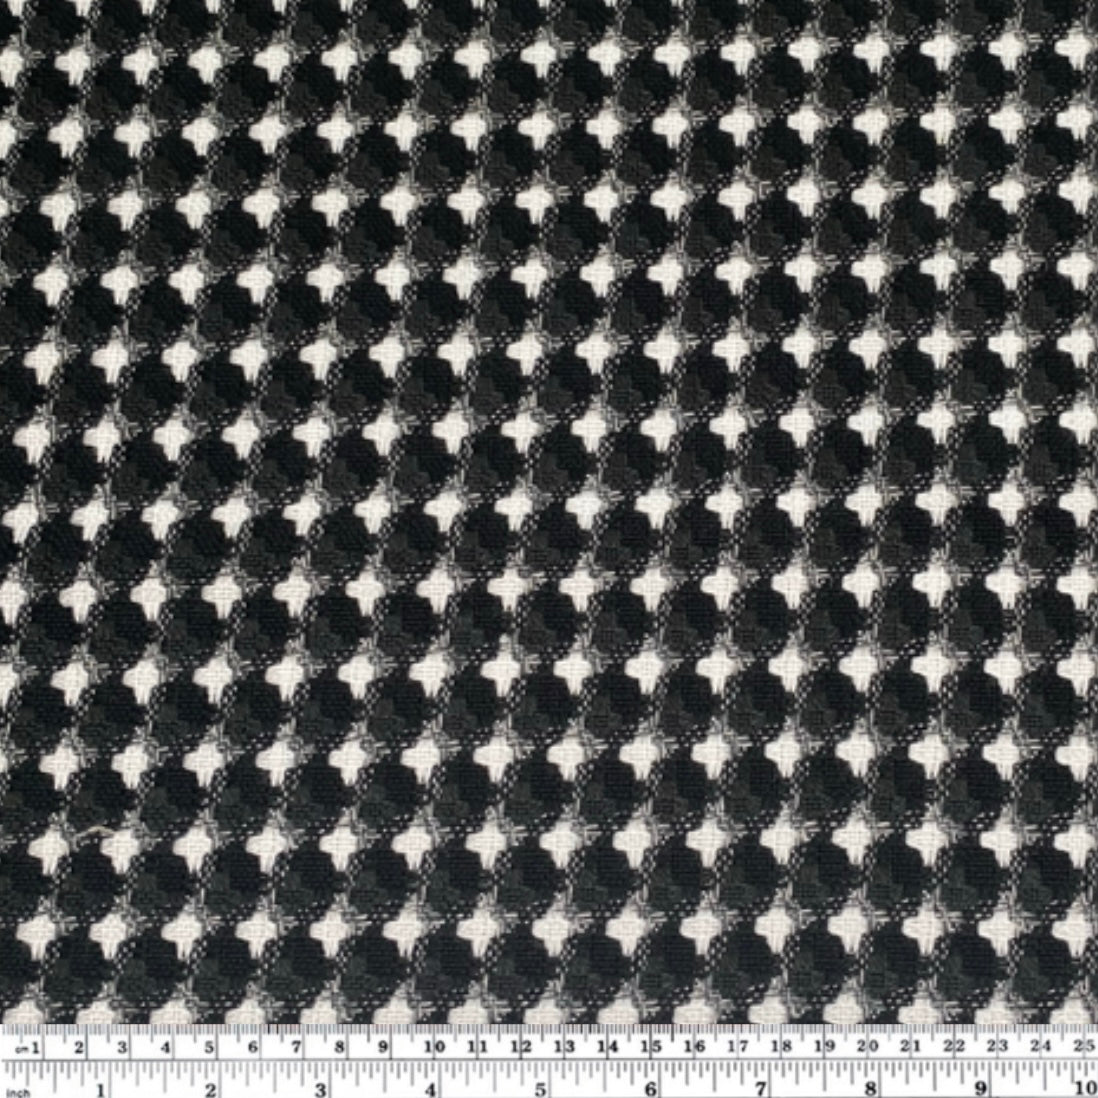 Wool Coating - Black/White/Grey